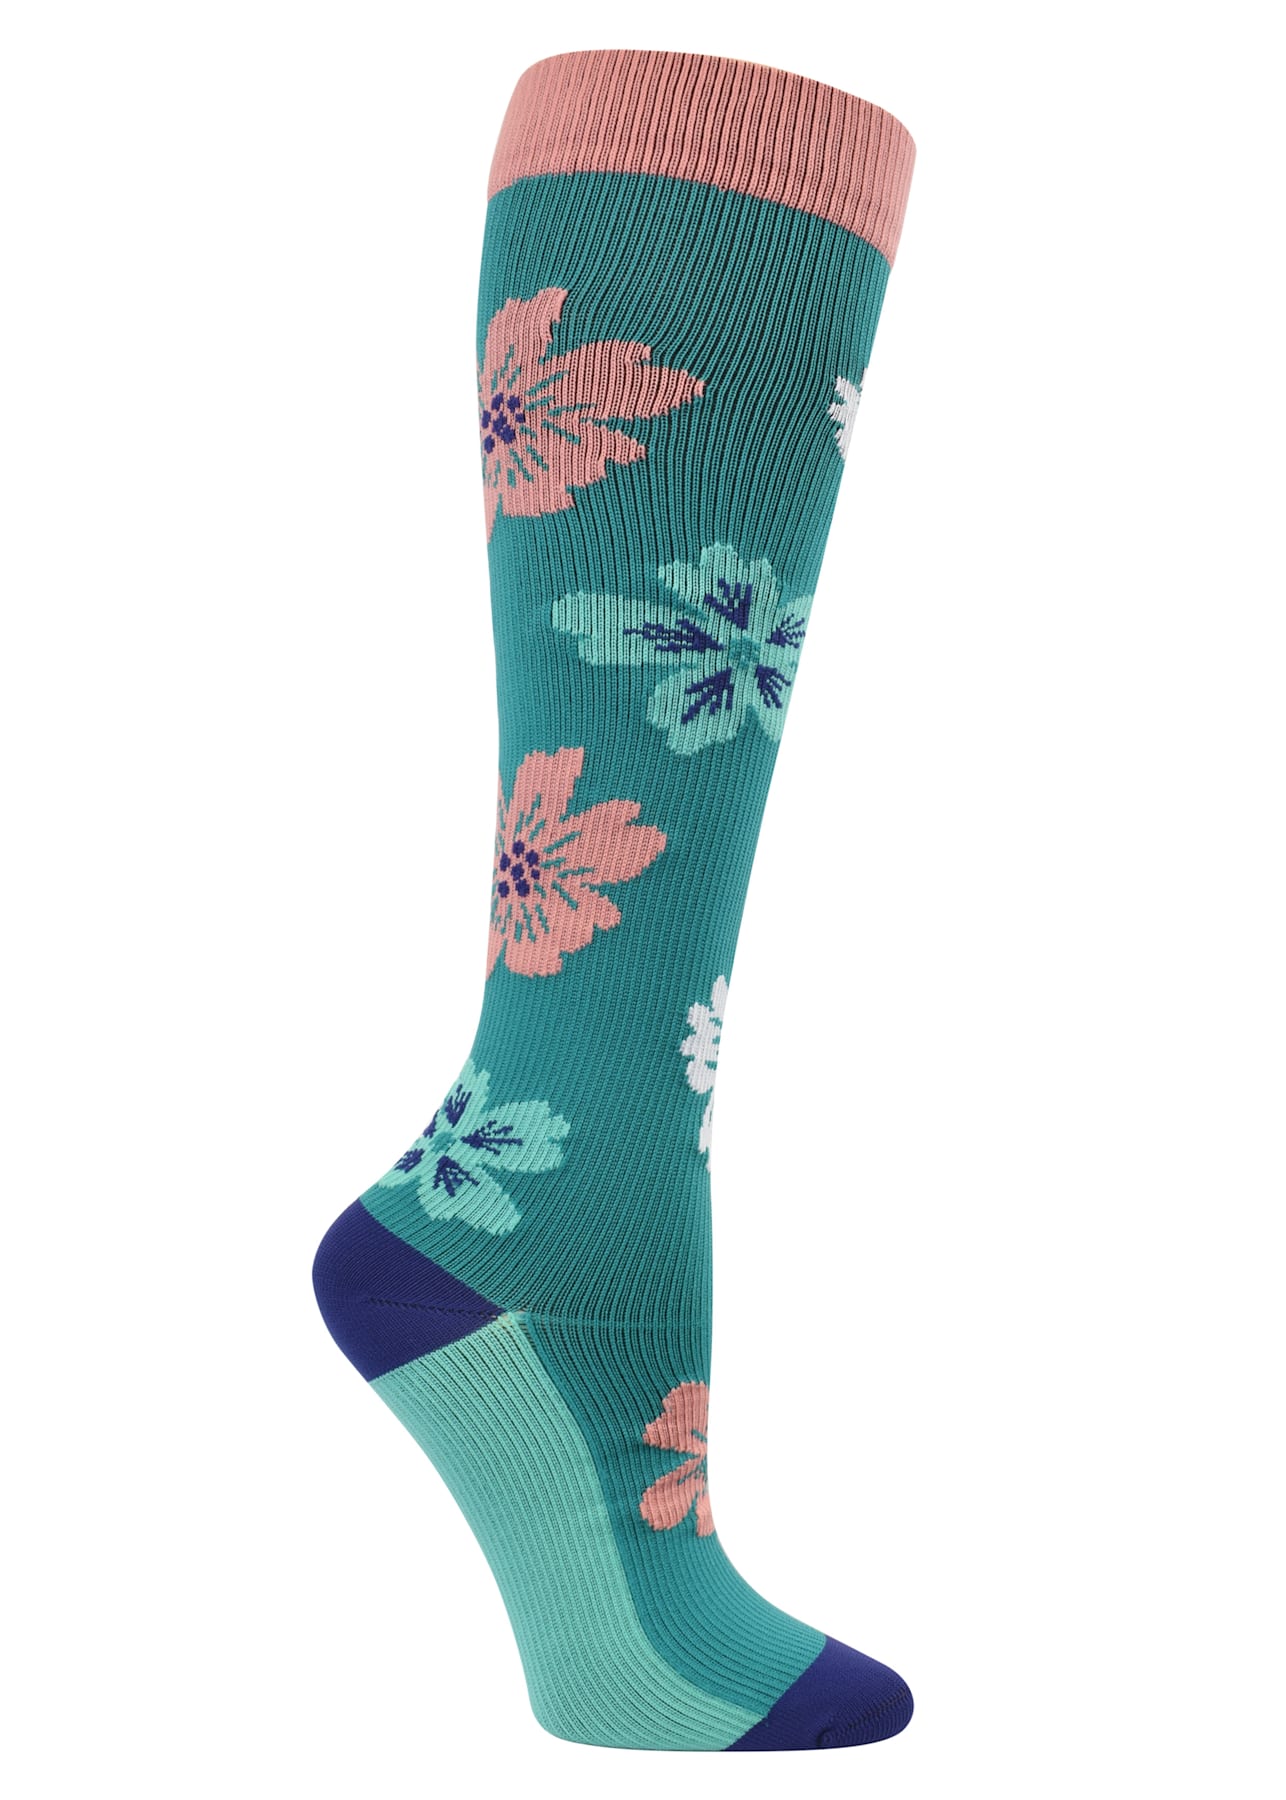 Desert Flower/Peacock 12-14mmHg Compression Socks | Scrubs & Beyond